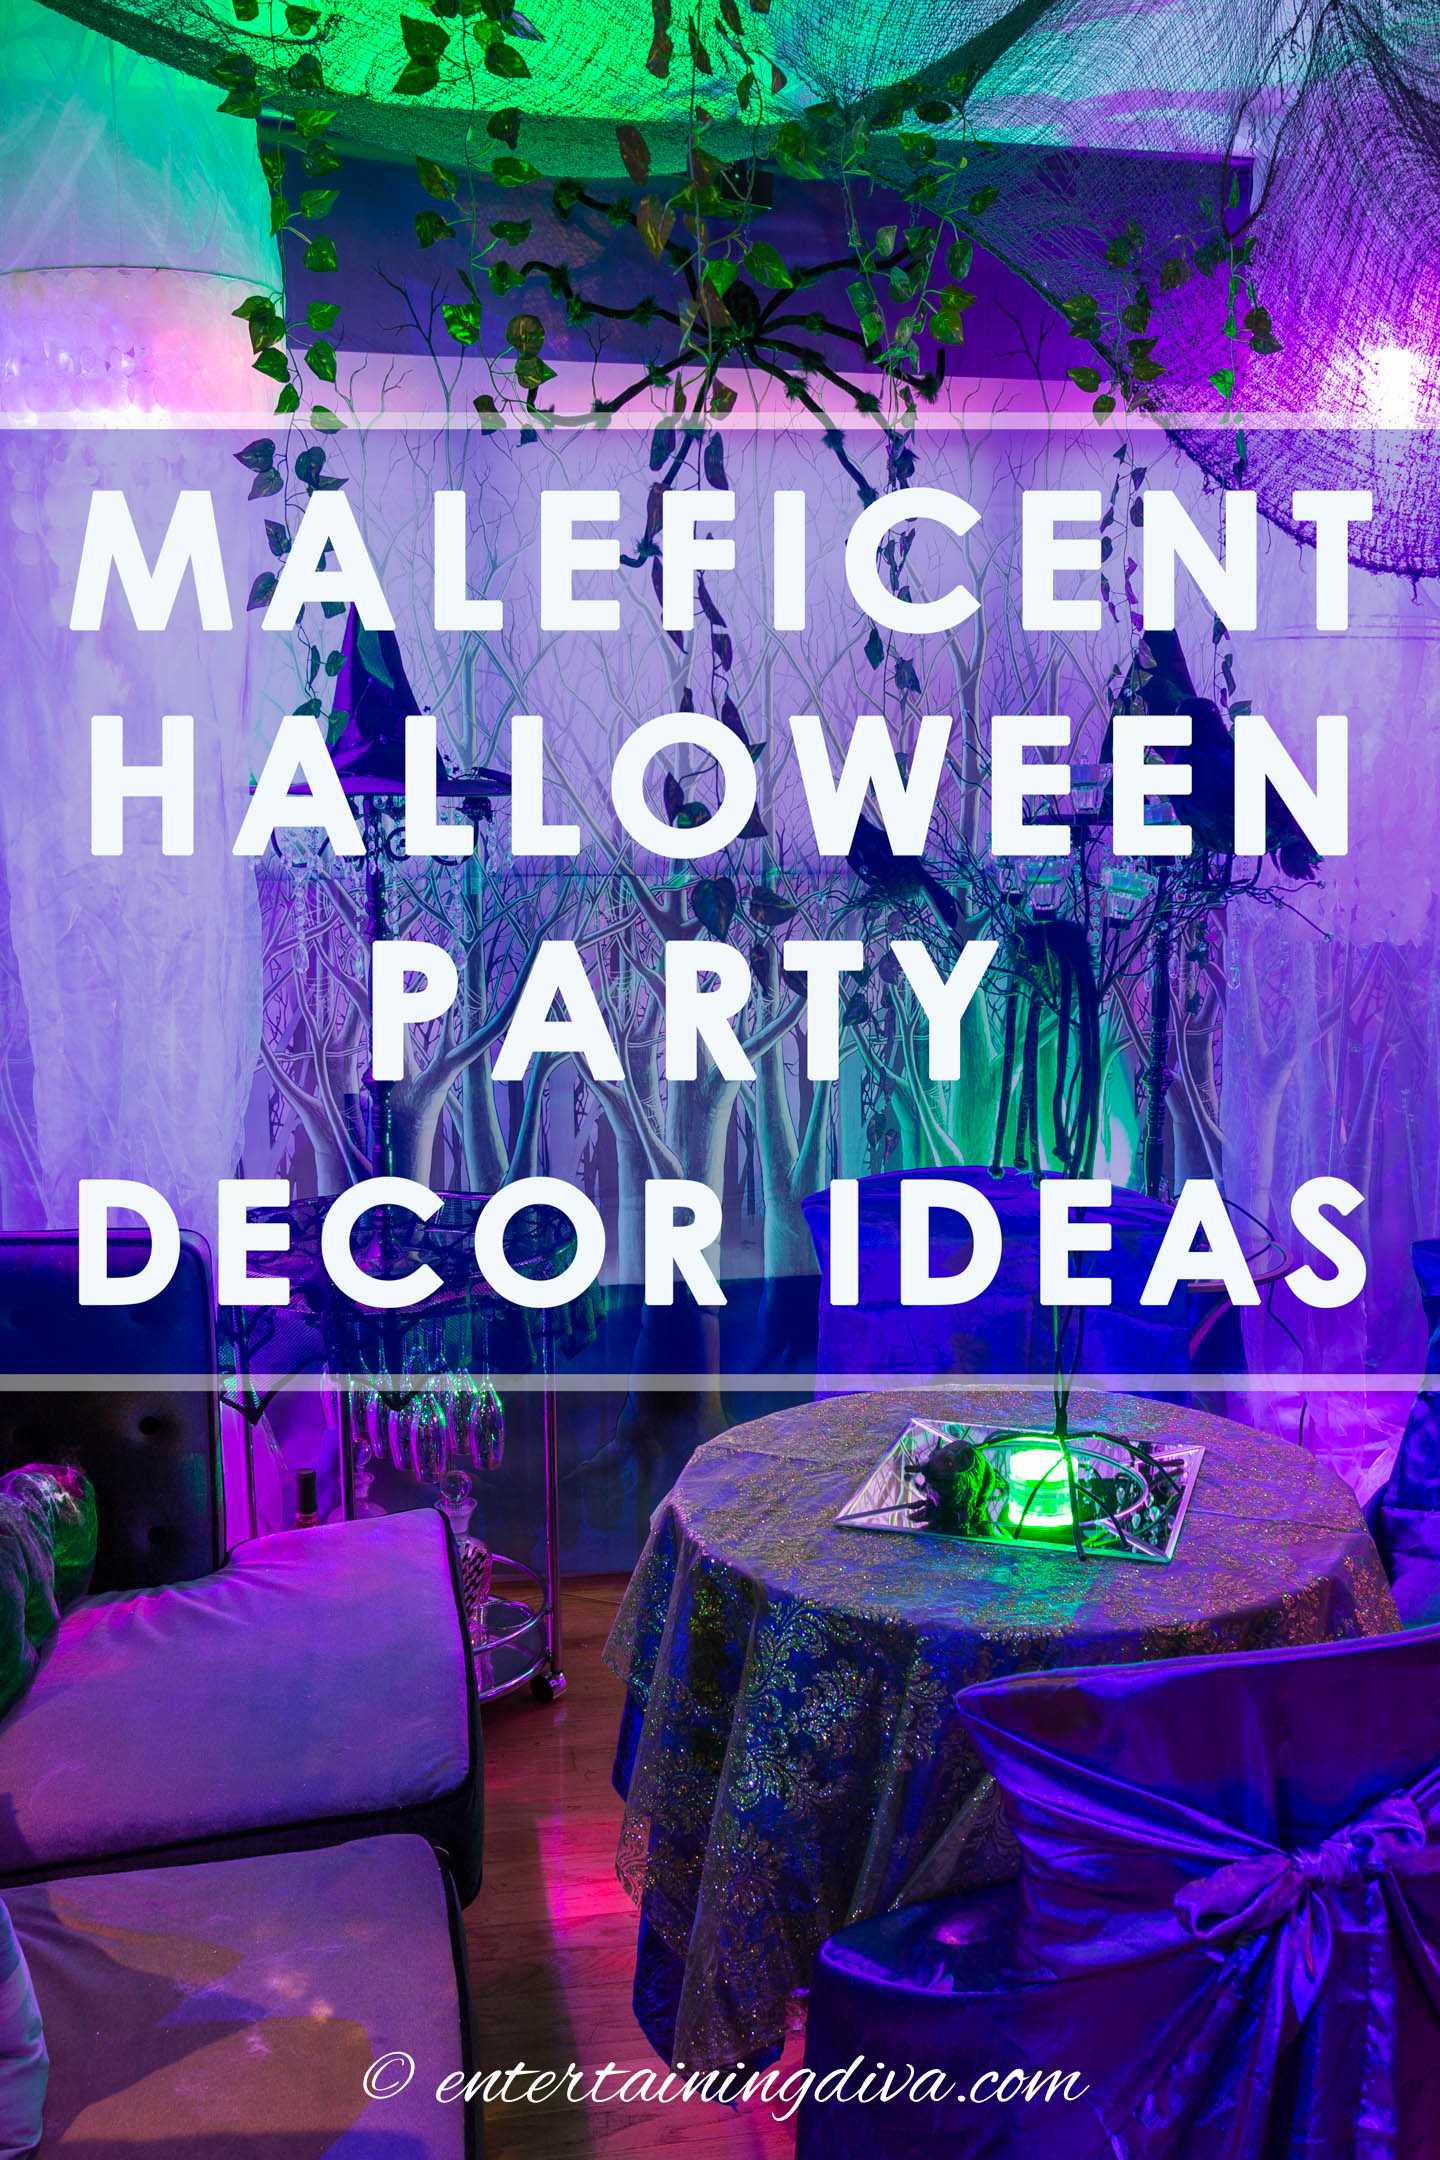 Maleficent party decor ideas